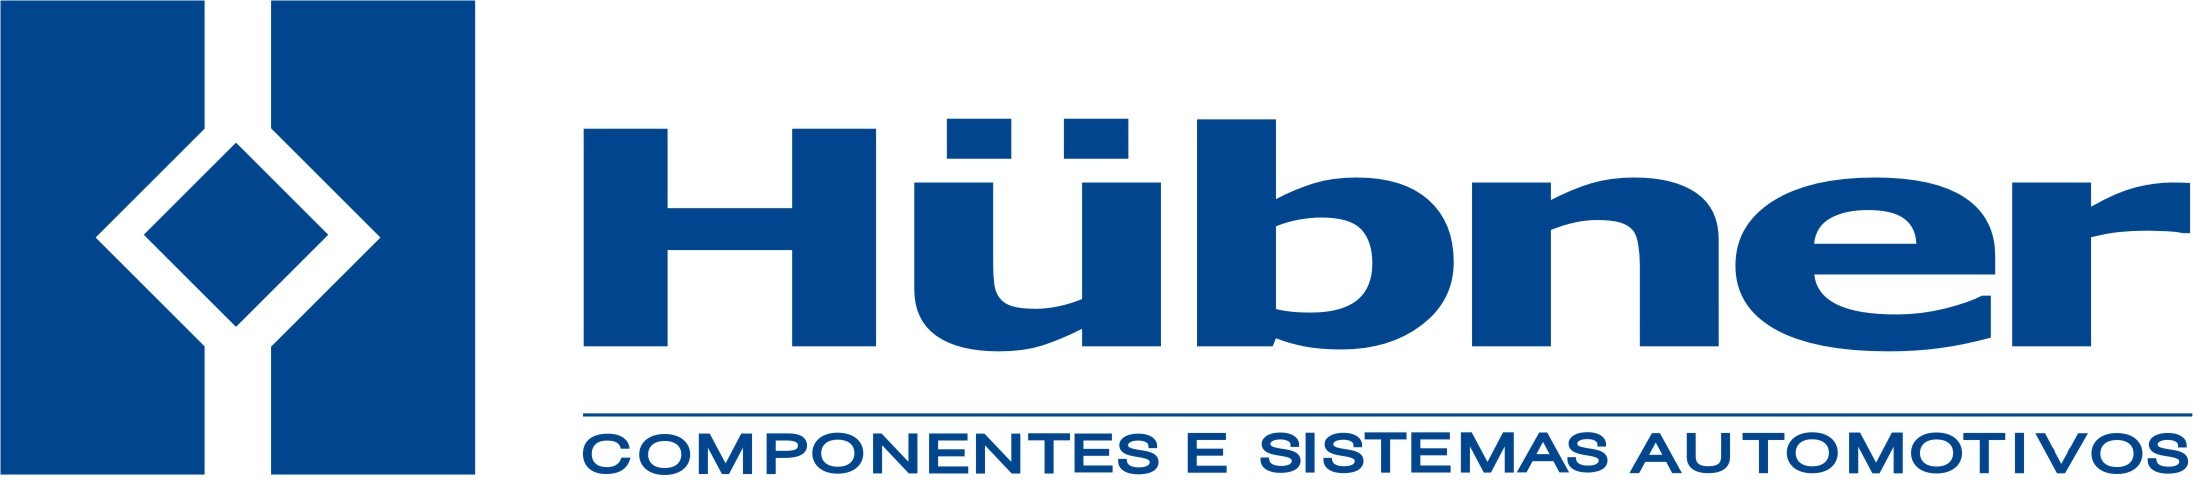 Logomarca da empresa